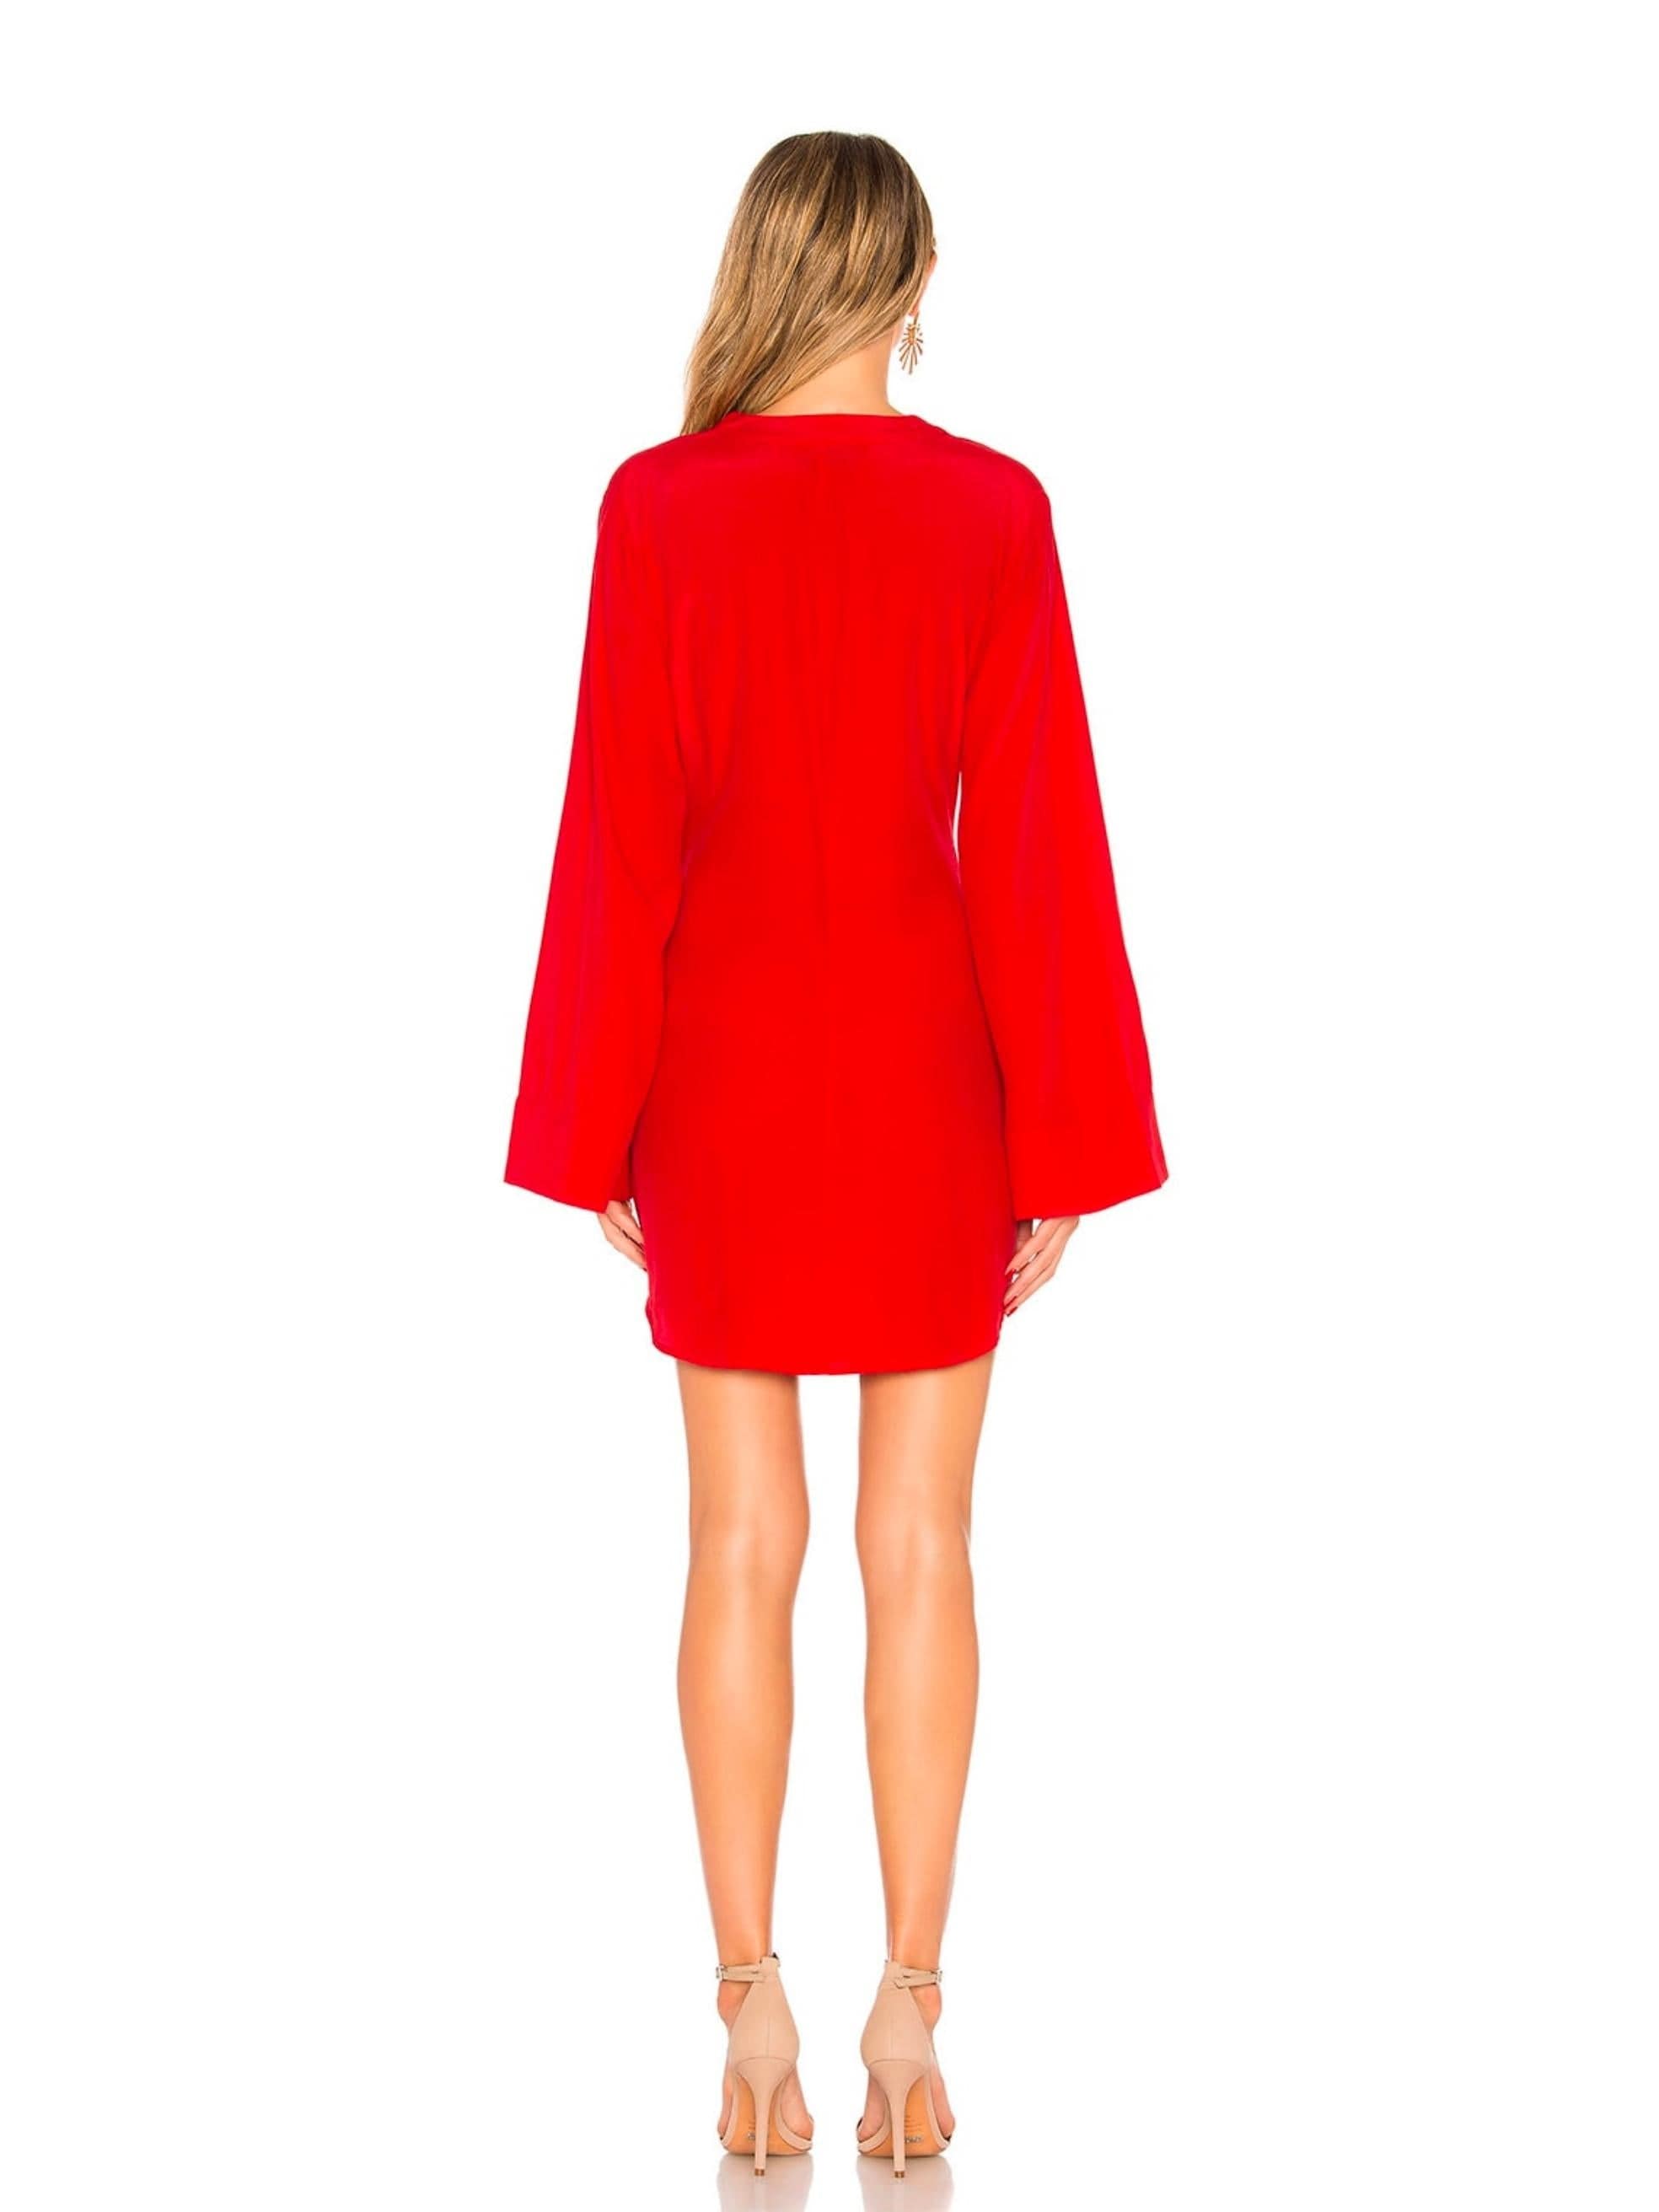 Janeiro Mini Dress in Red